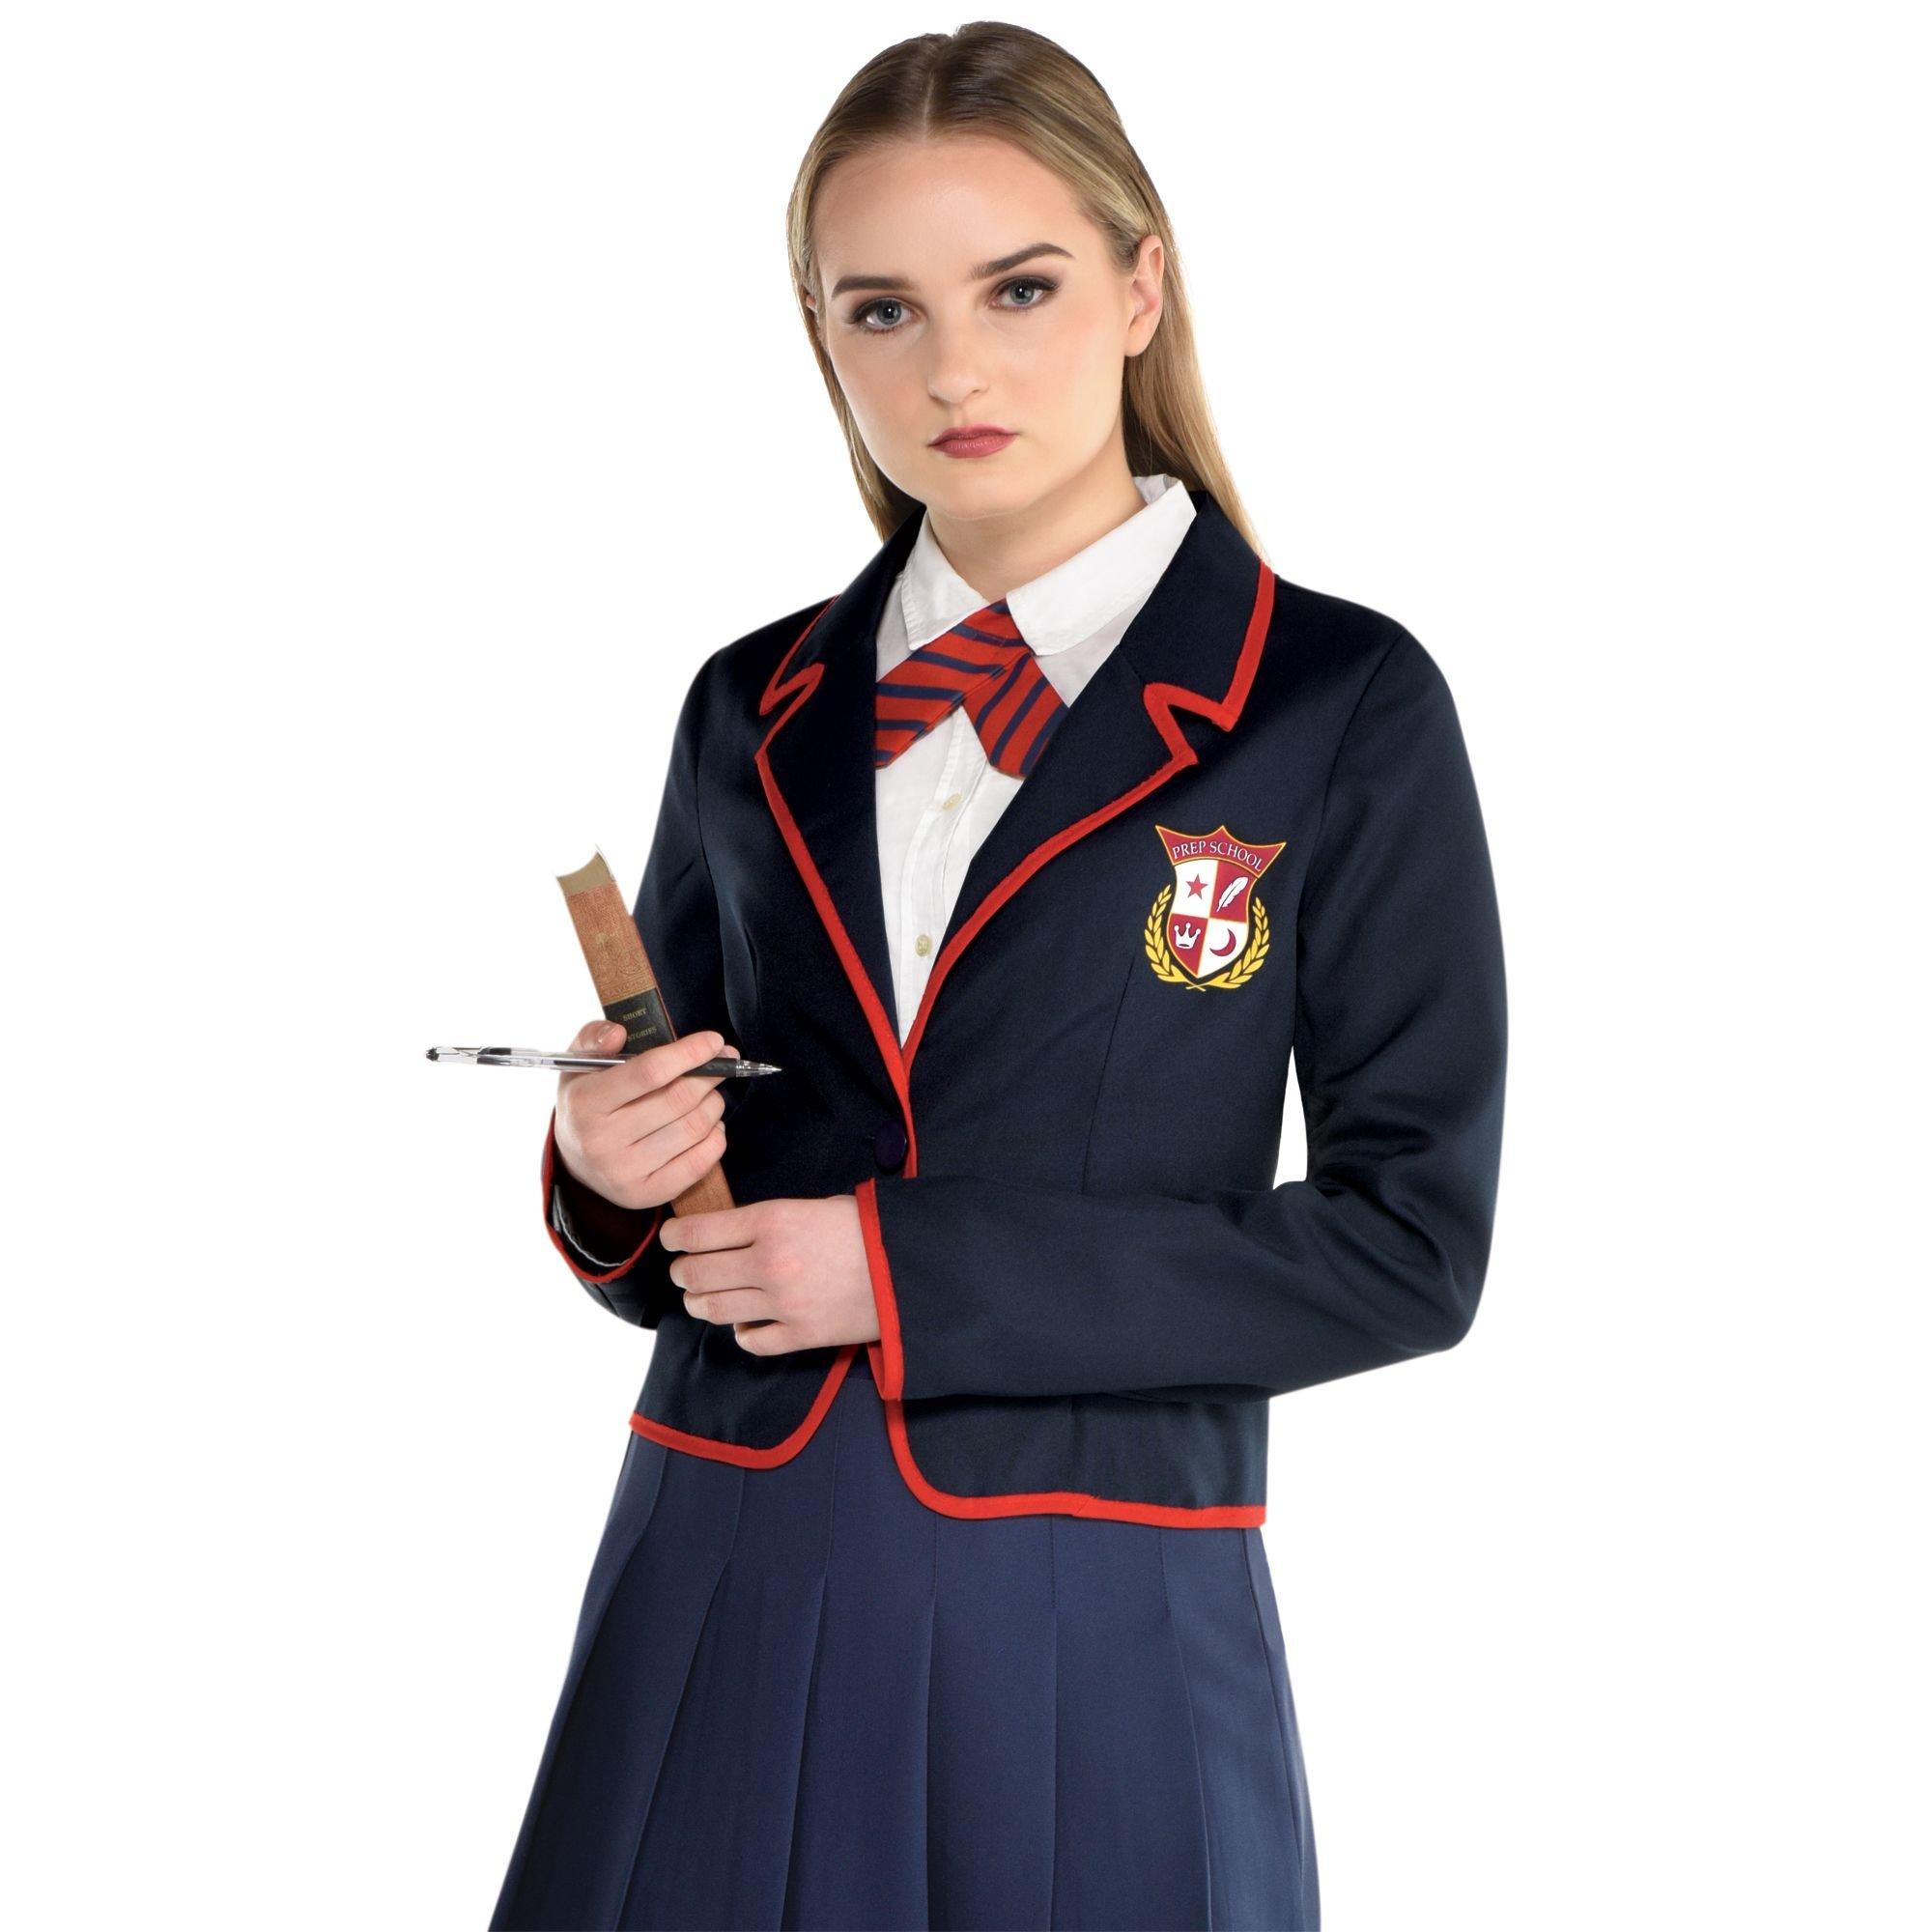 Preppy Schoolgirl Costume Accessory Kit